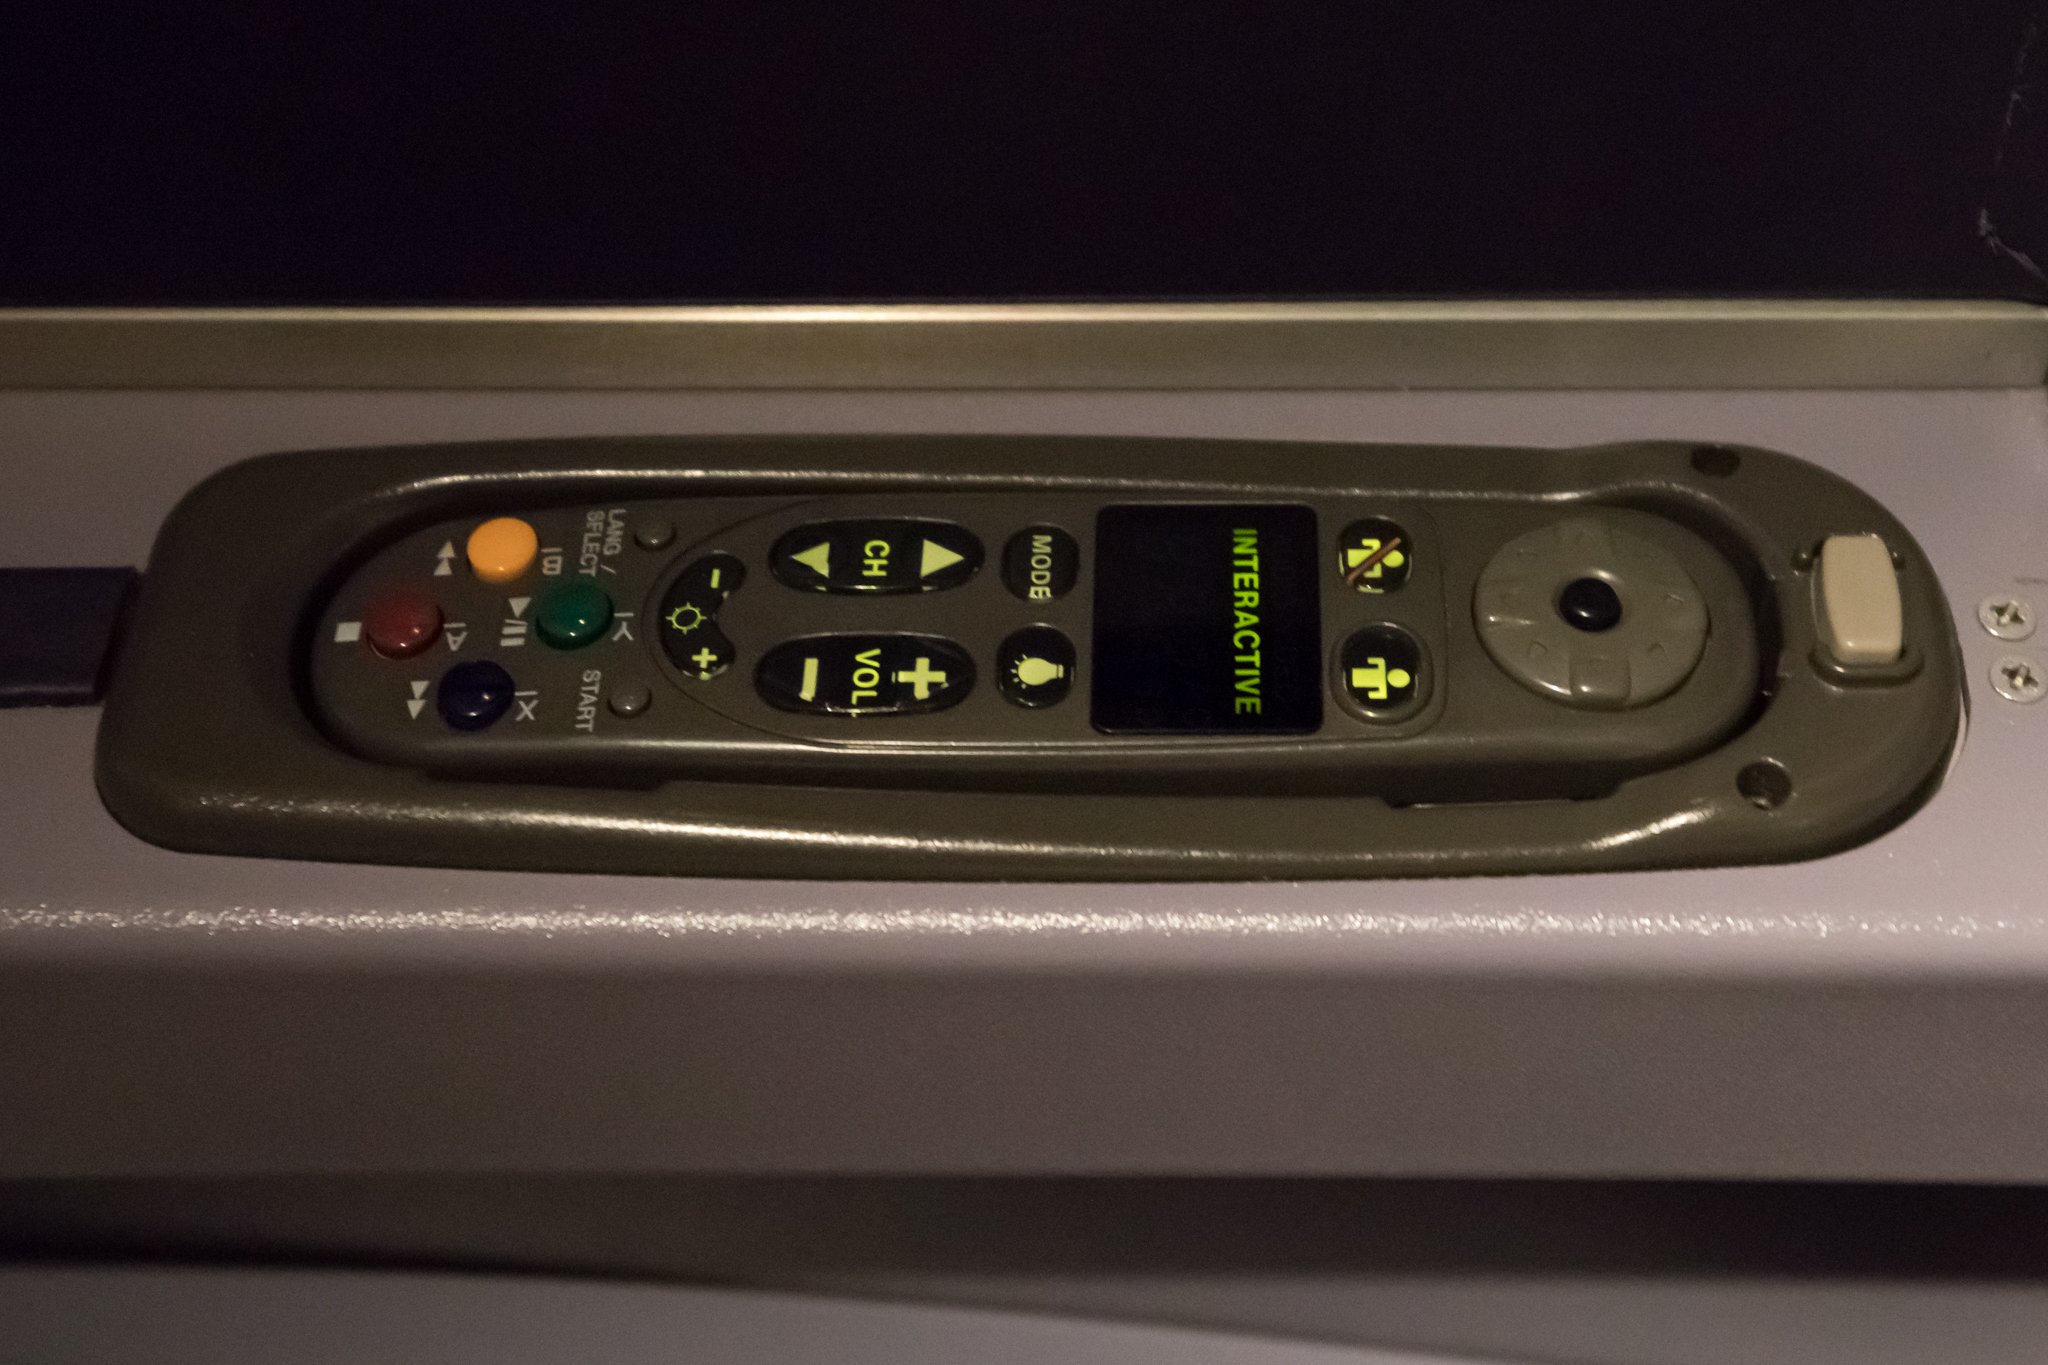 a remote control on a plane